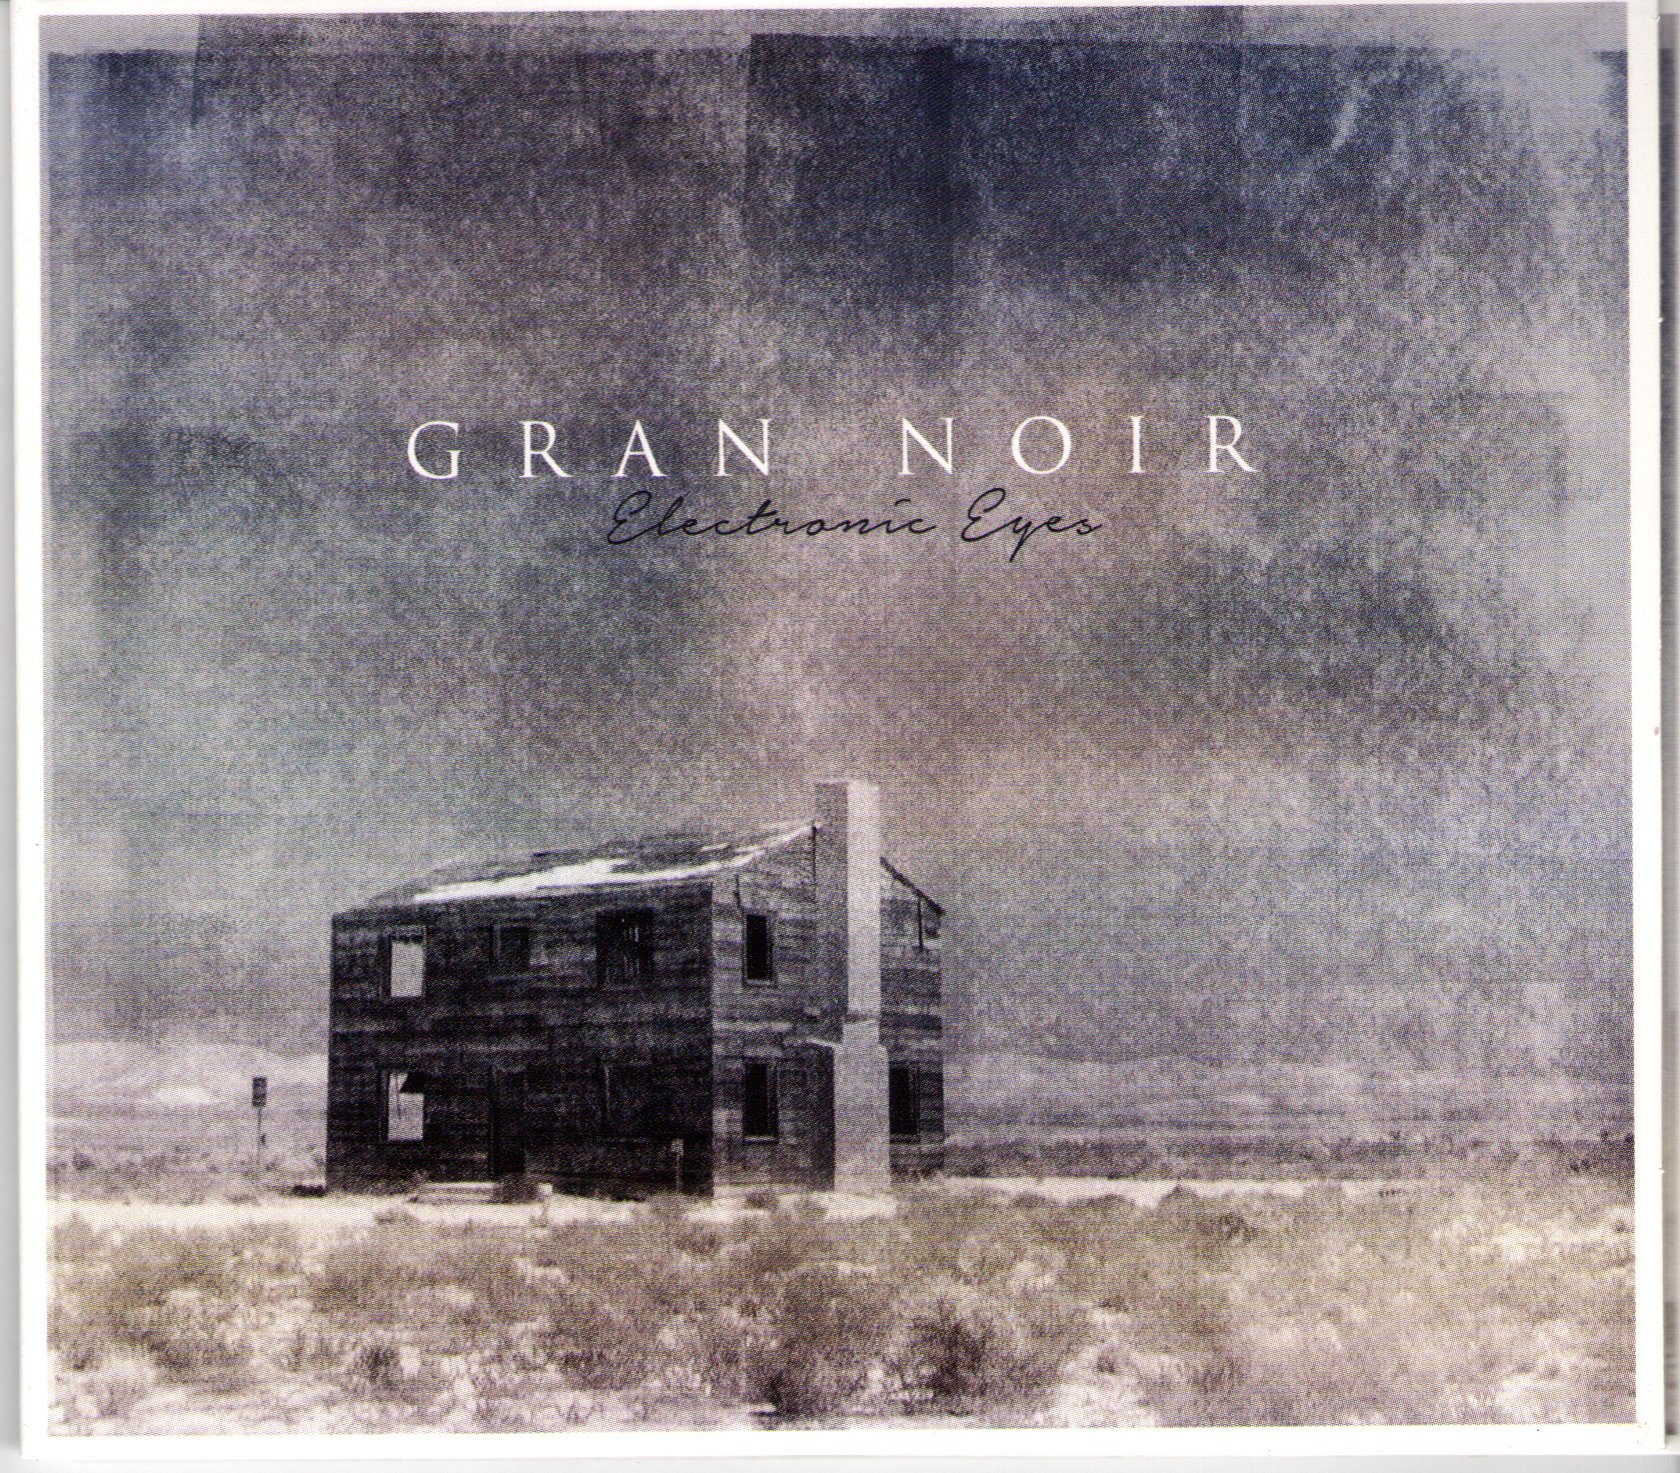 Gran Noir - Electronic Eyes (2017) FLAC Download